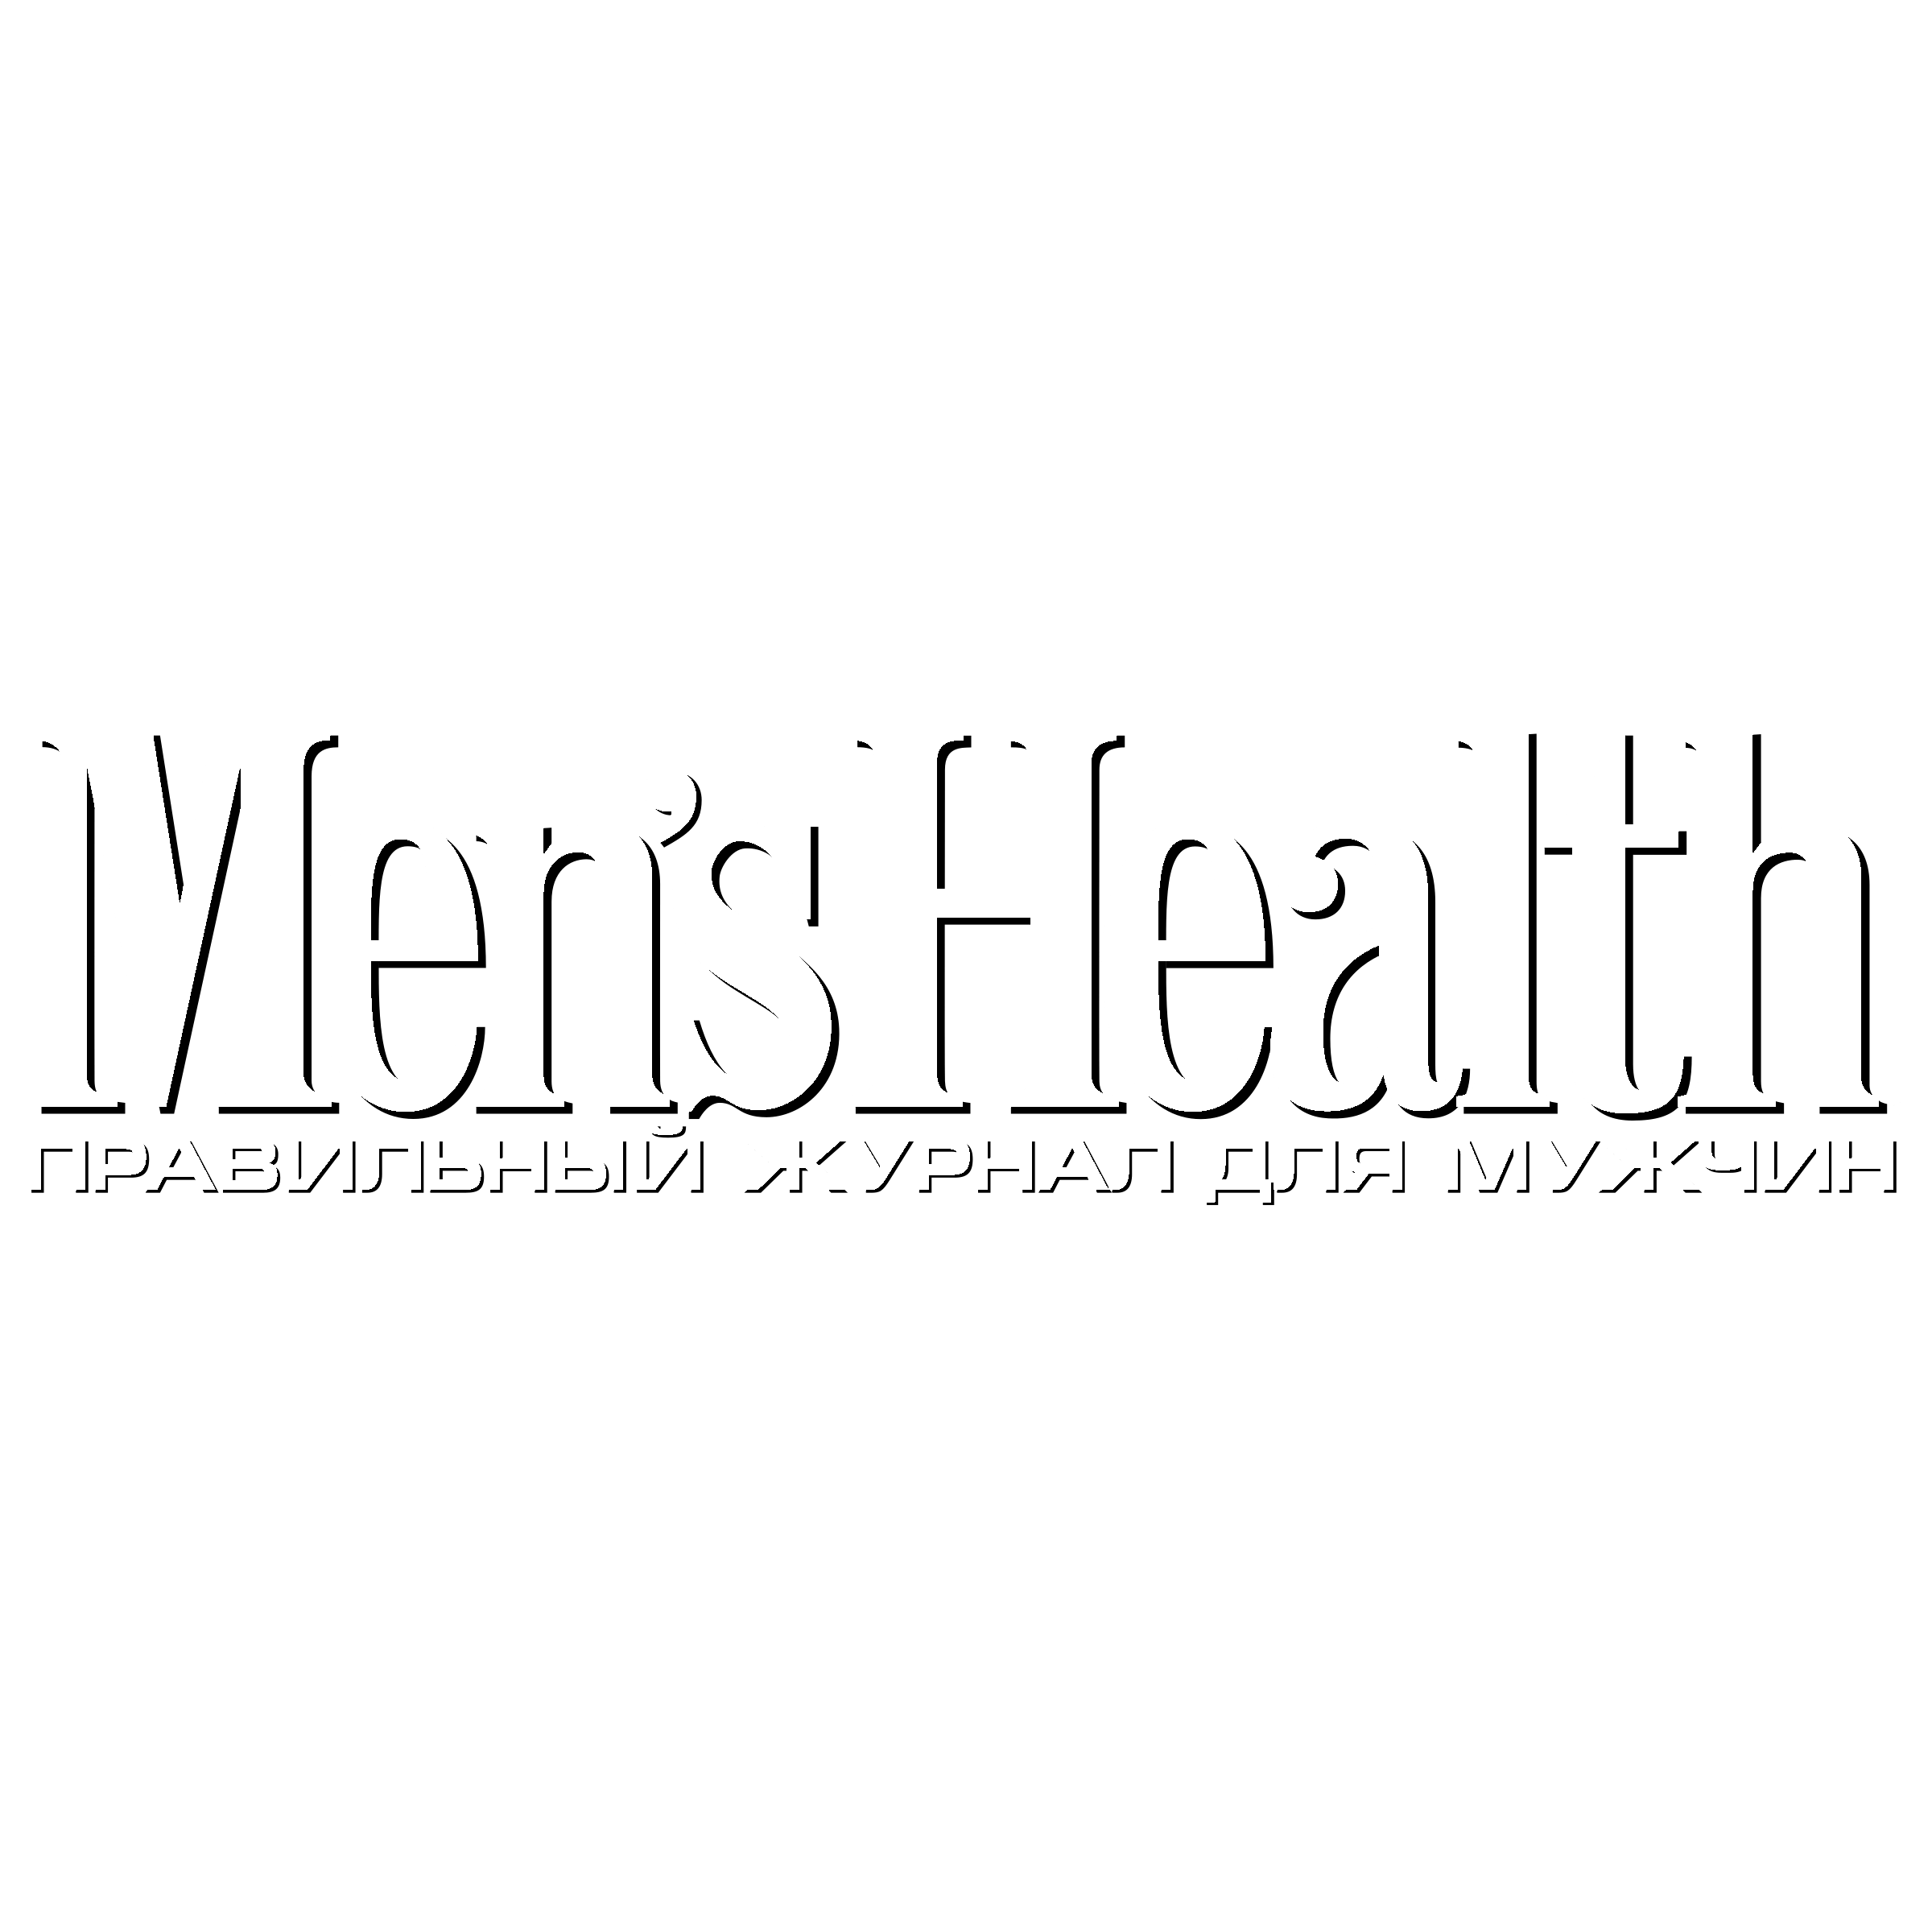 Men's Health Logo - Men's Health Logo PNG Transparent & SVG Vector - Freebie Supply